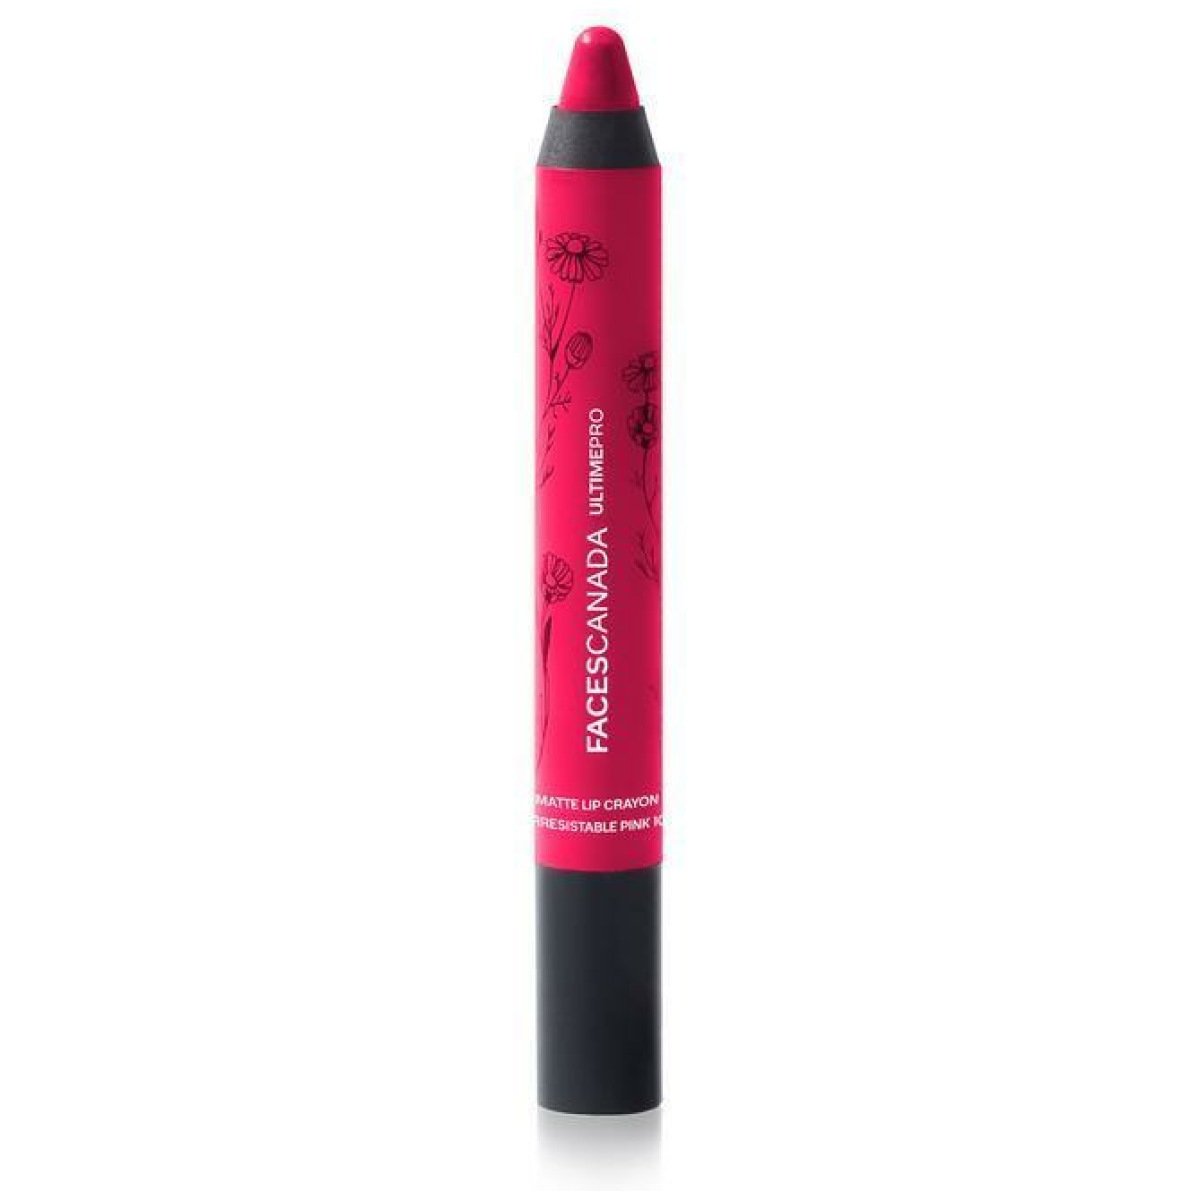 Faces Canada Ultime Pro Matte Lip Crayon - Irresistible Pink 10 (2.8g)